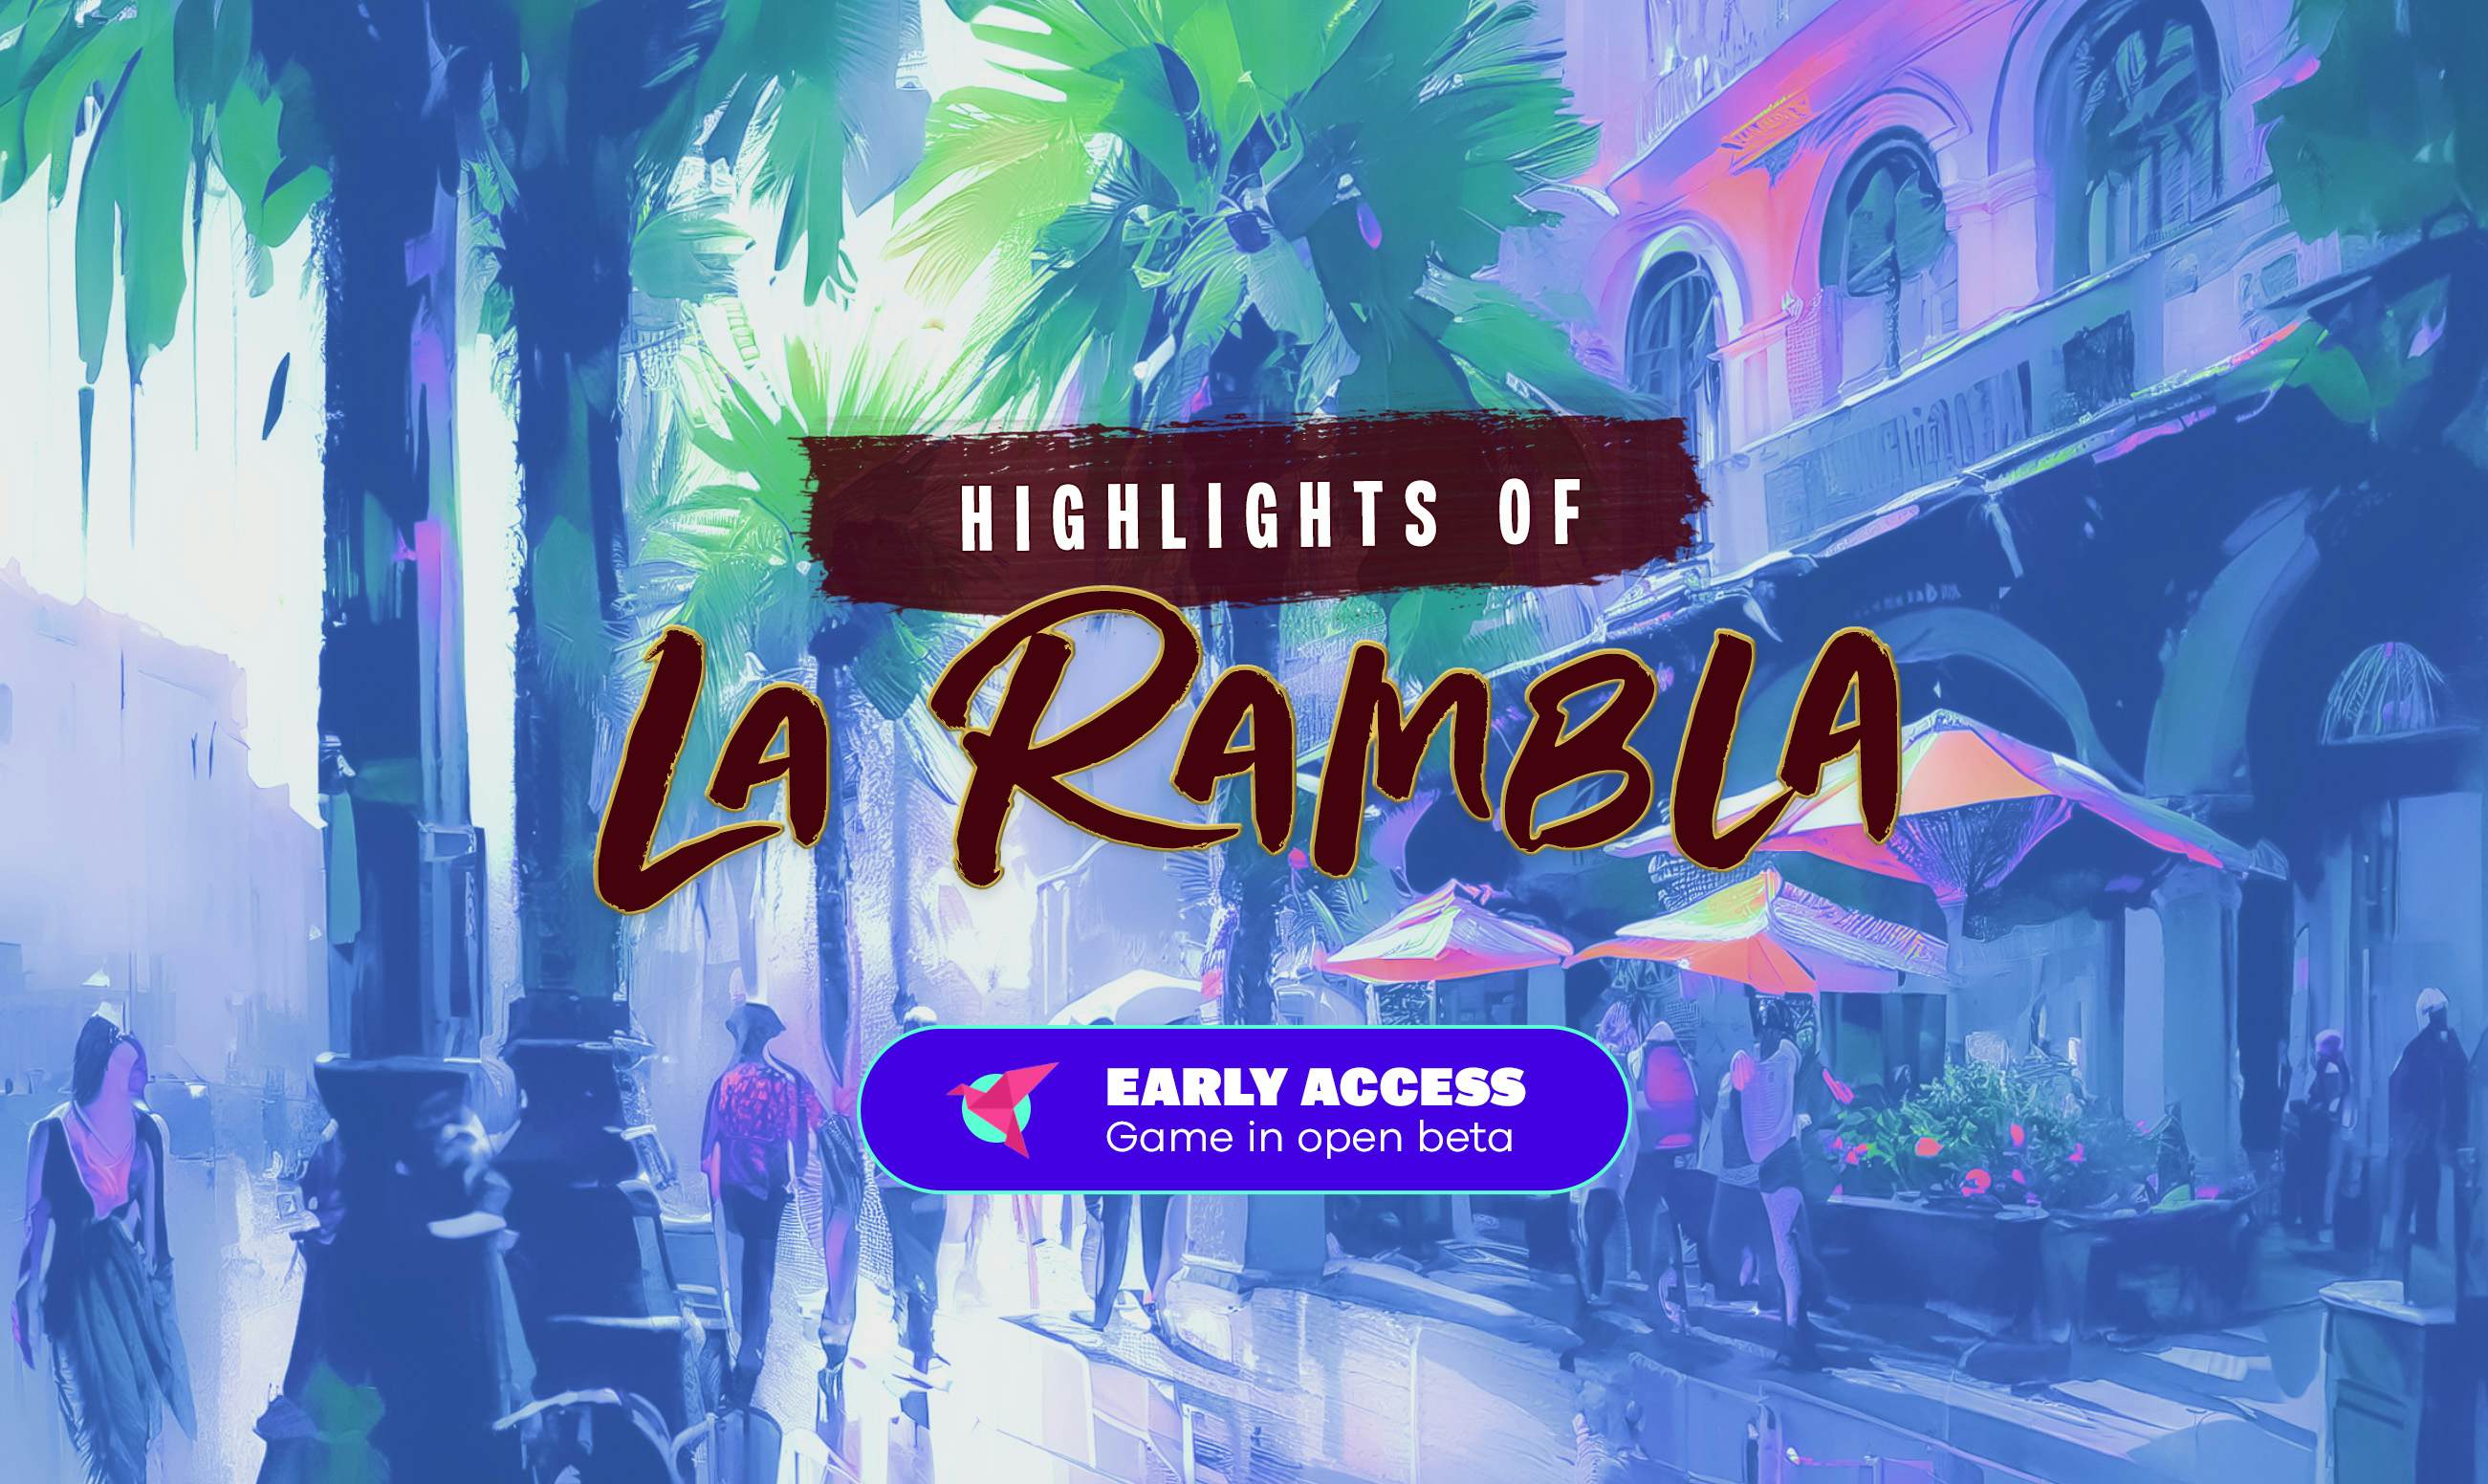 Highlights of La Rambla, Barcelona image